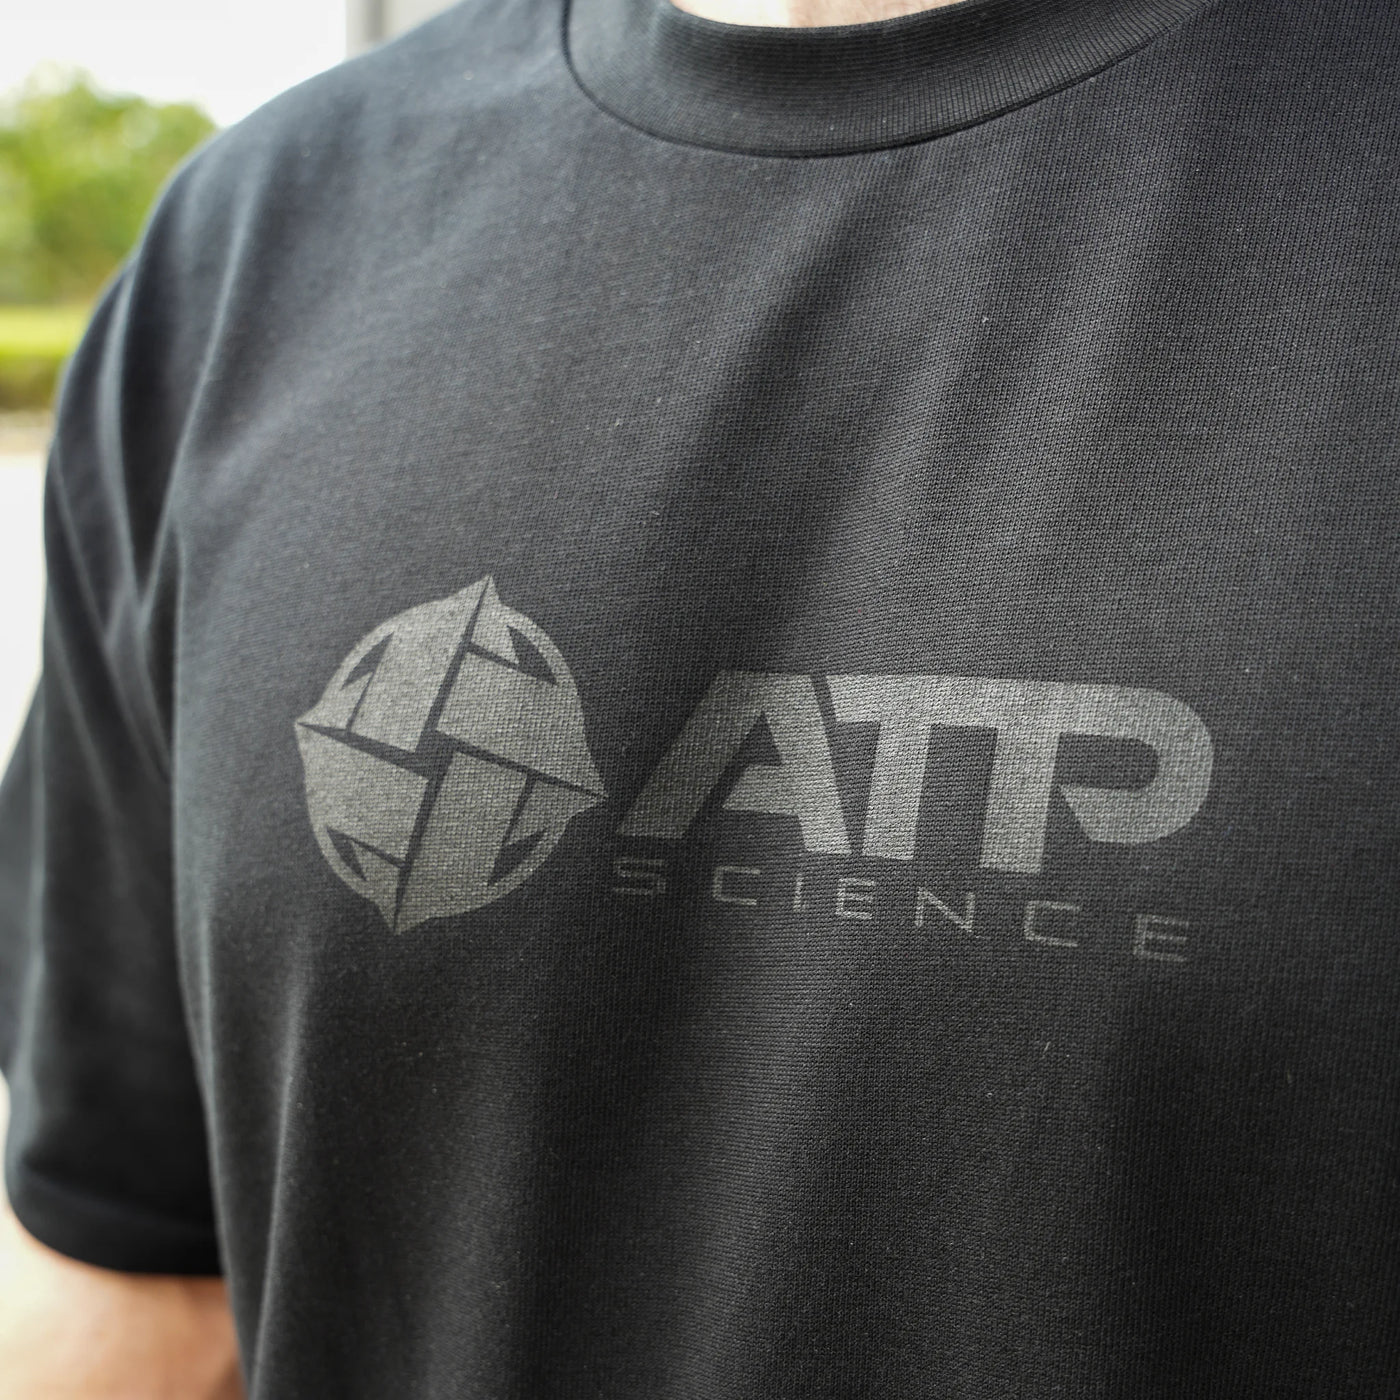 ATP Science Oversized Unisex Tee - Black